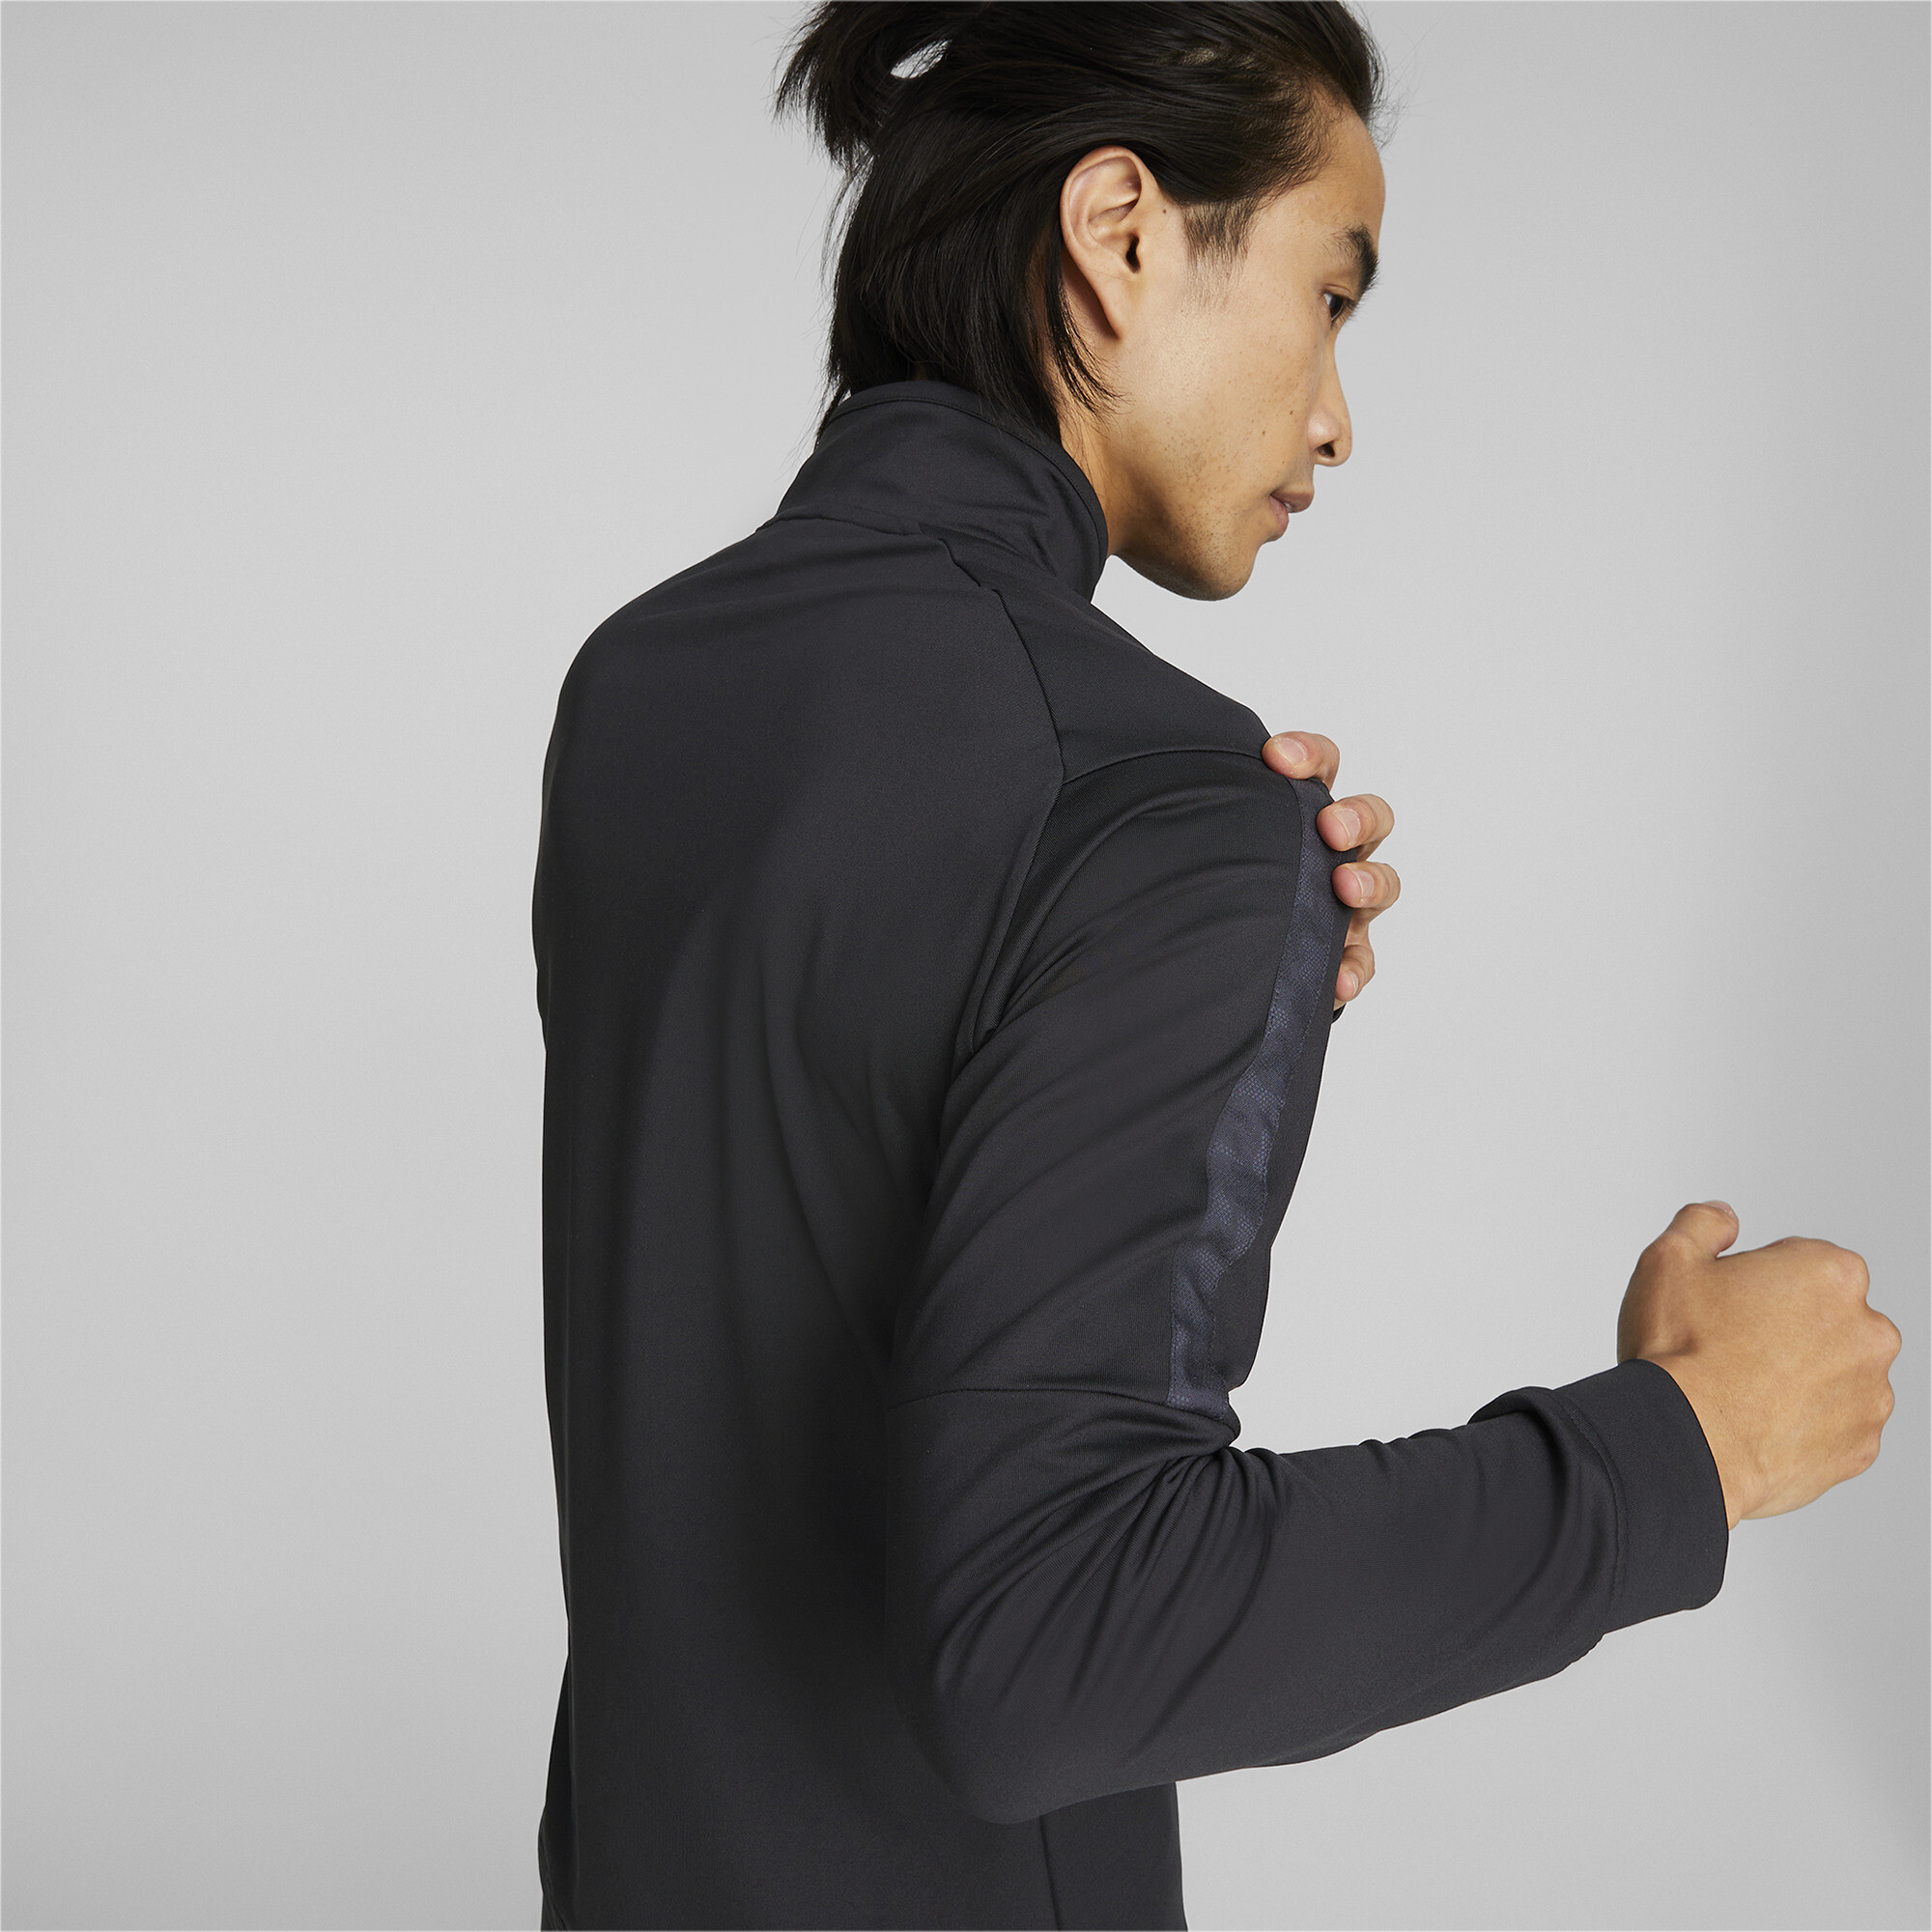 Men's PUMA Train Off Season Half-Zip Training Sweatshirt Men In Black, Size Small